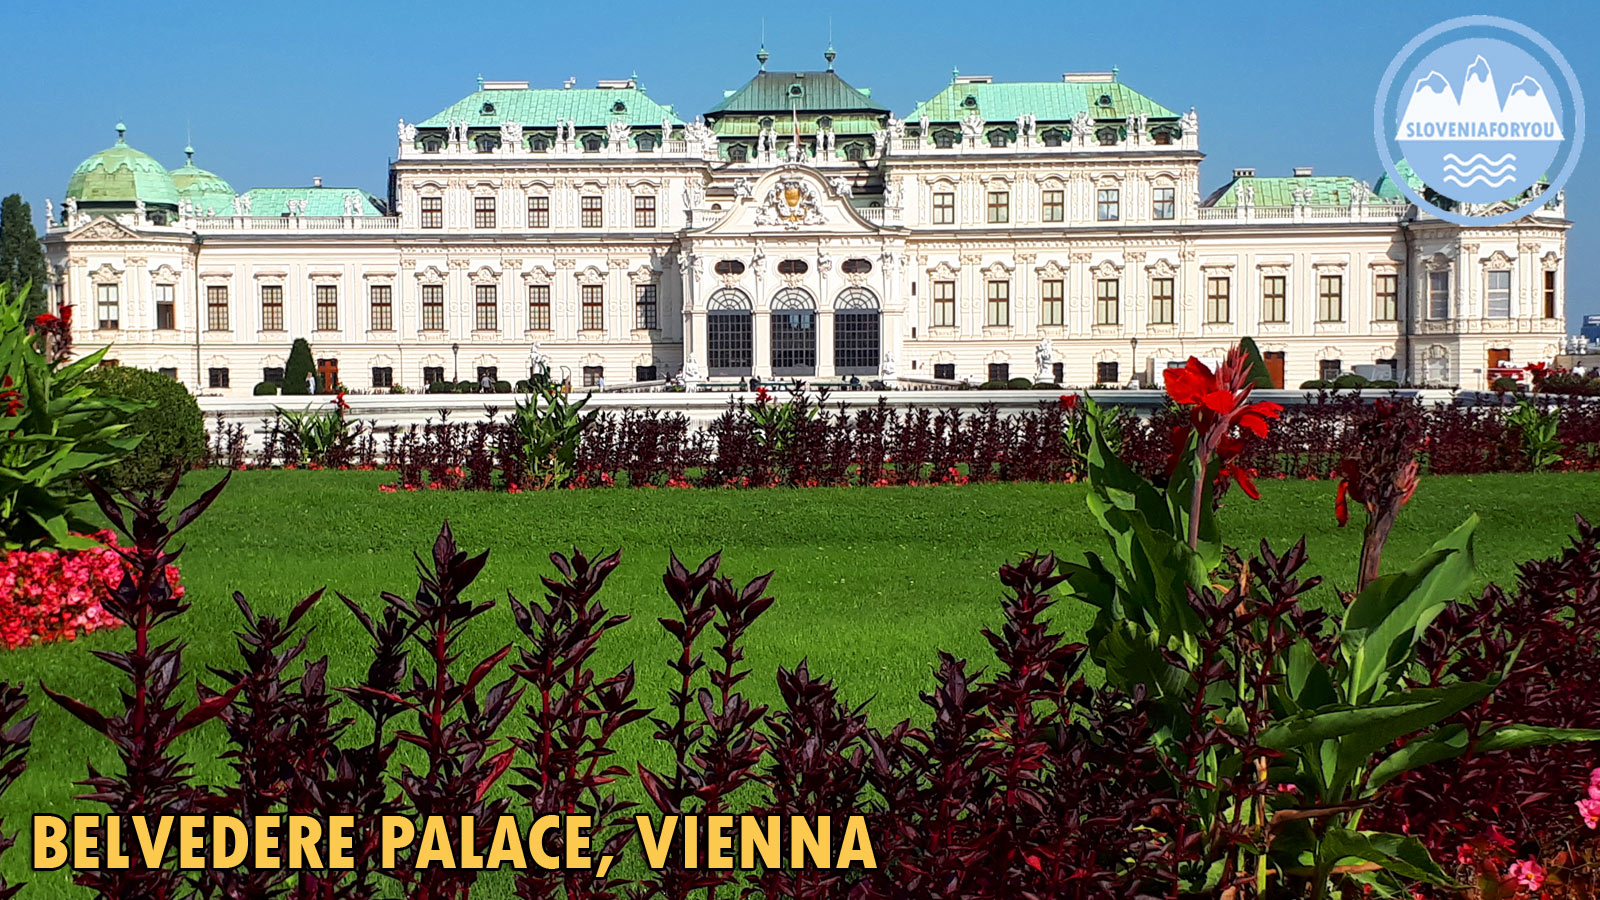 Belvedere Palace, Vienna, Sloveniaforyou